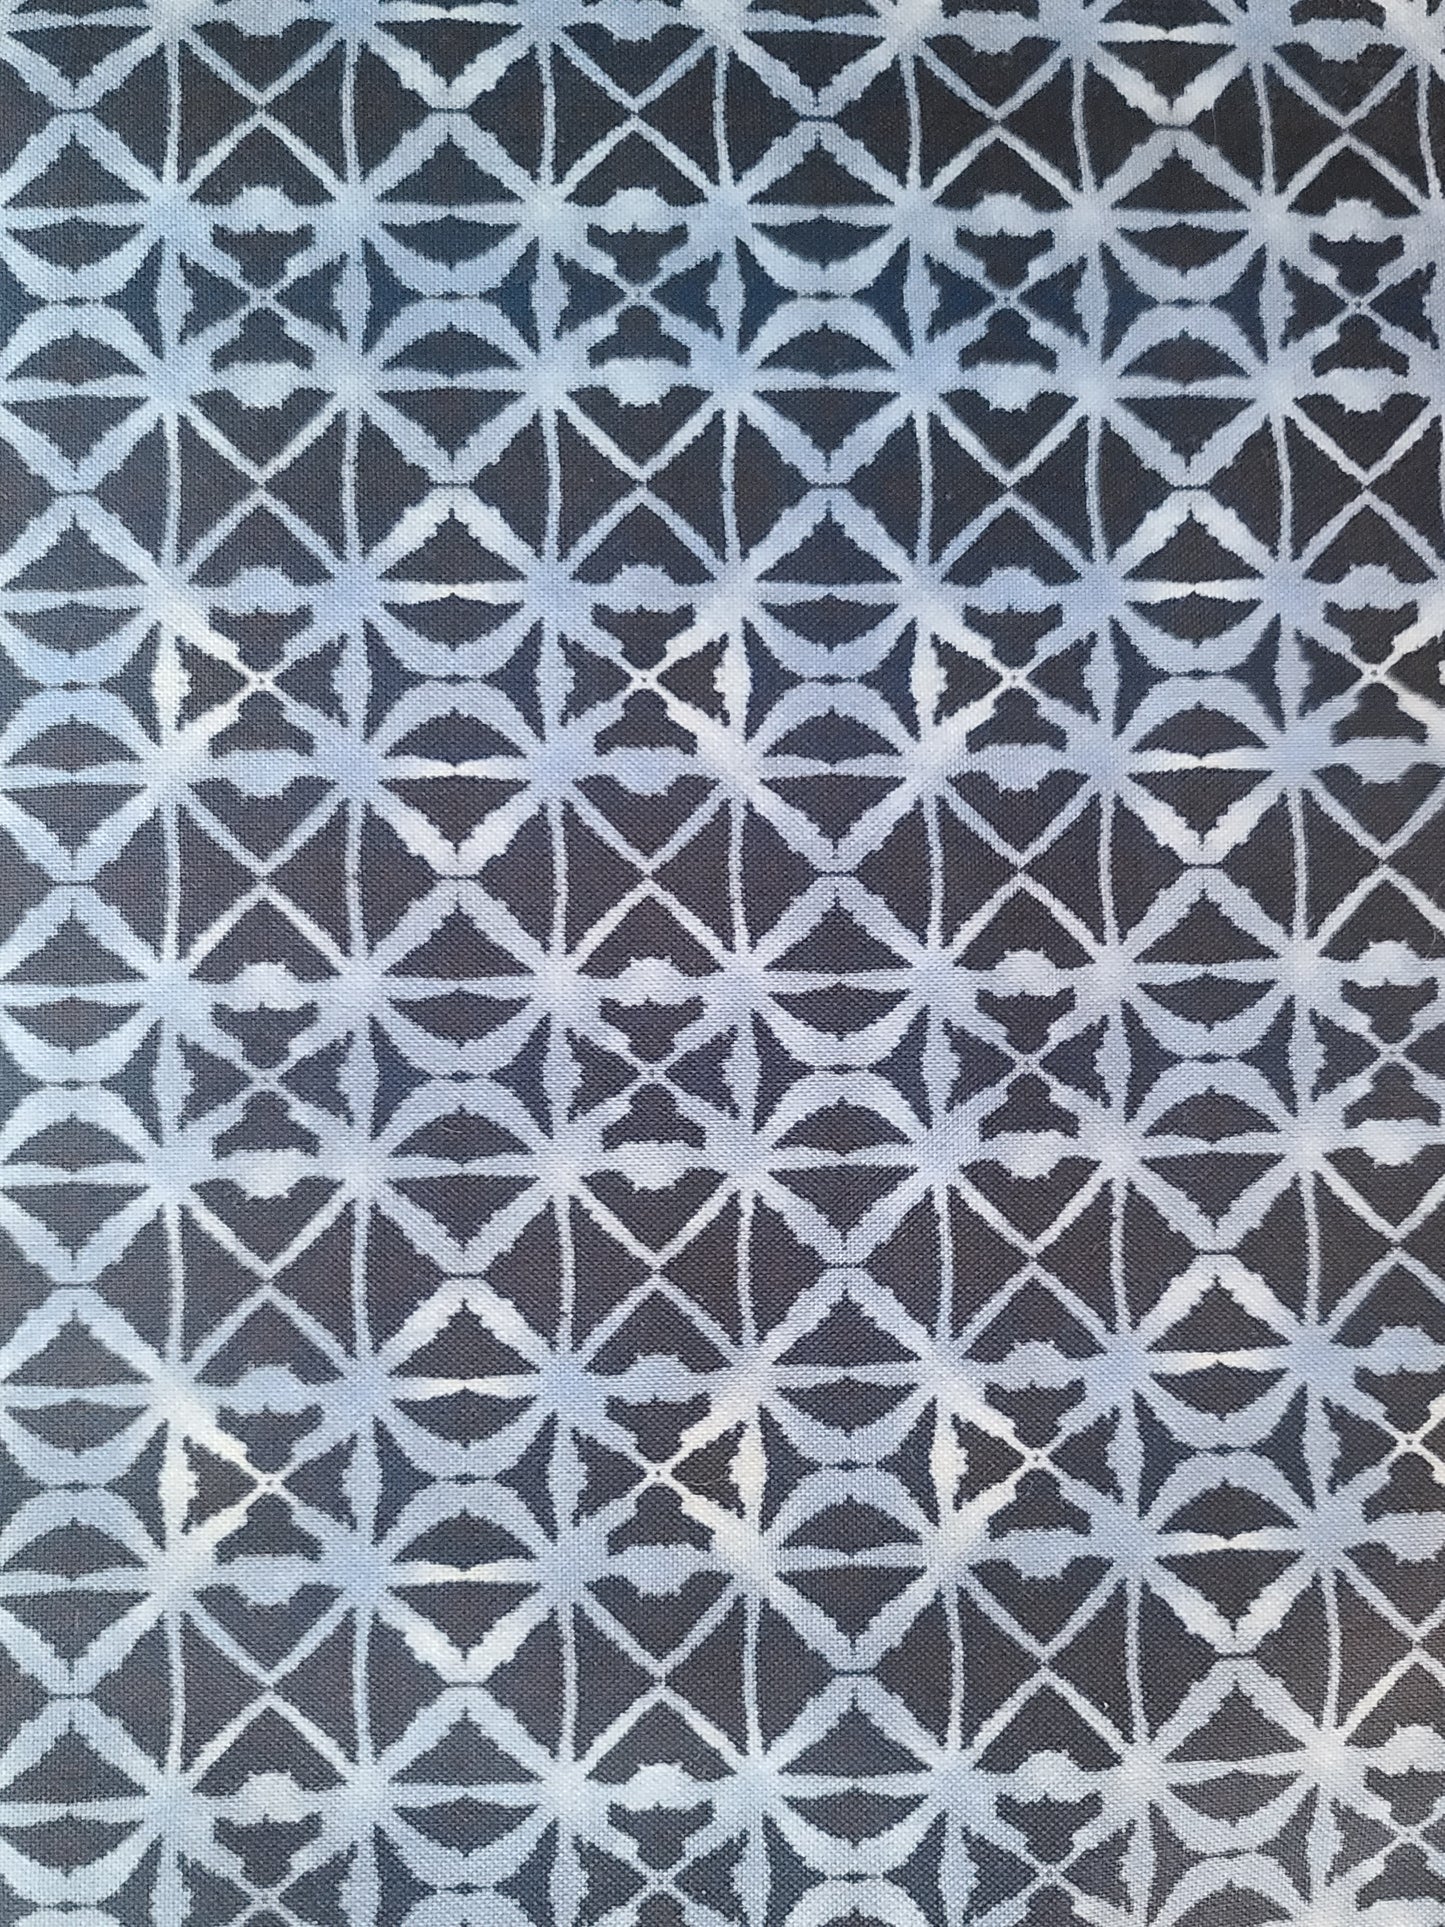 INDIGO SPLASH - YARDAGE for Twin Quilt Pattern by the QUARTER YARD